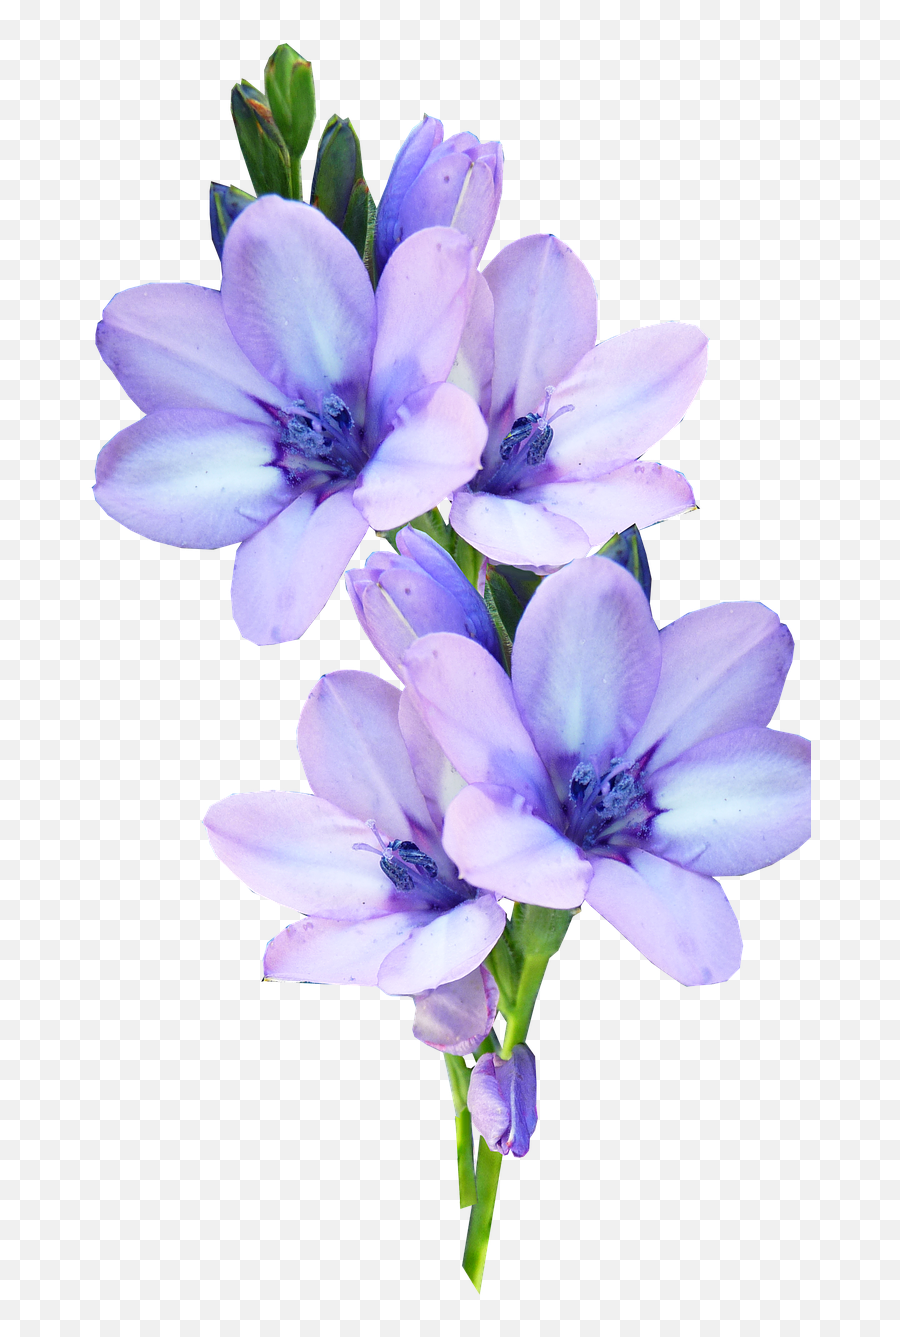 Pastel Flowers Png Picture - Pastel Purple Flowers Transparent Background,Pastel Flowers Png